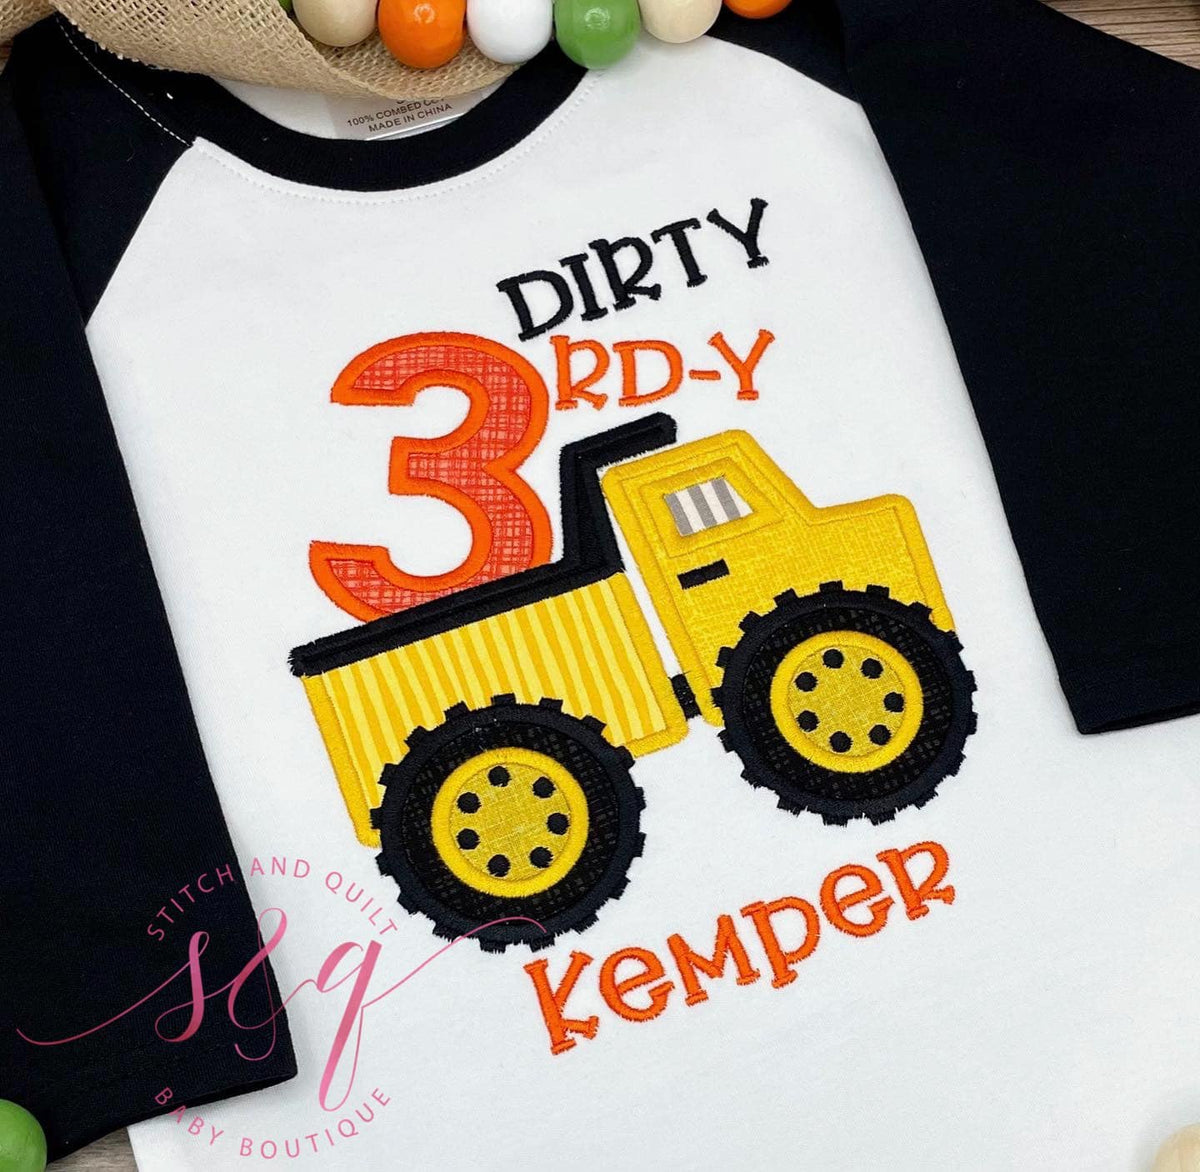 Dump truck birthday shirt for 3rd birthday, Dirty 3rd-y Birthday shirt, Dump truck birthday shirt